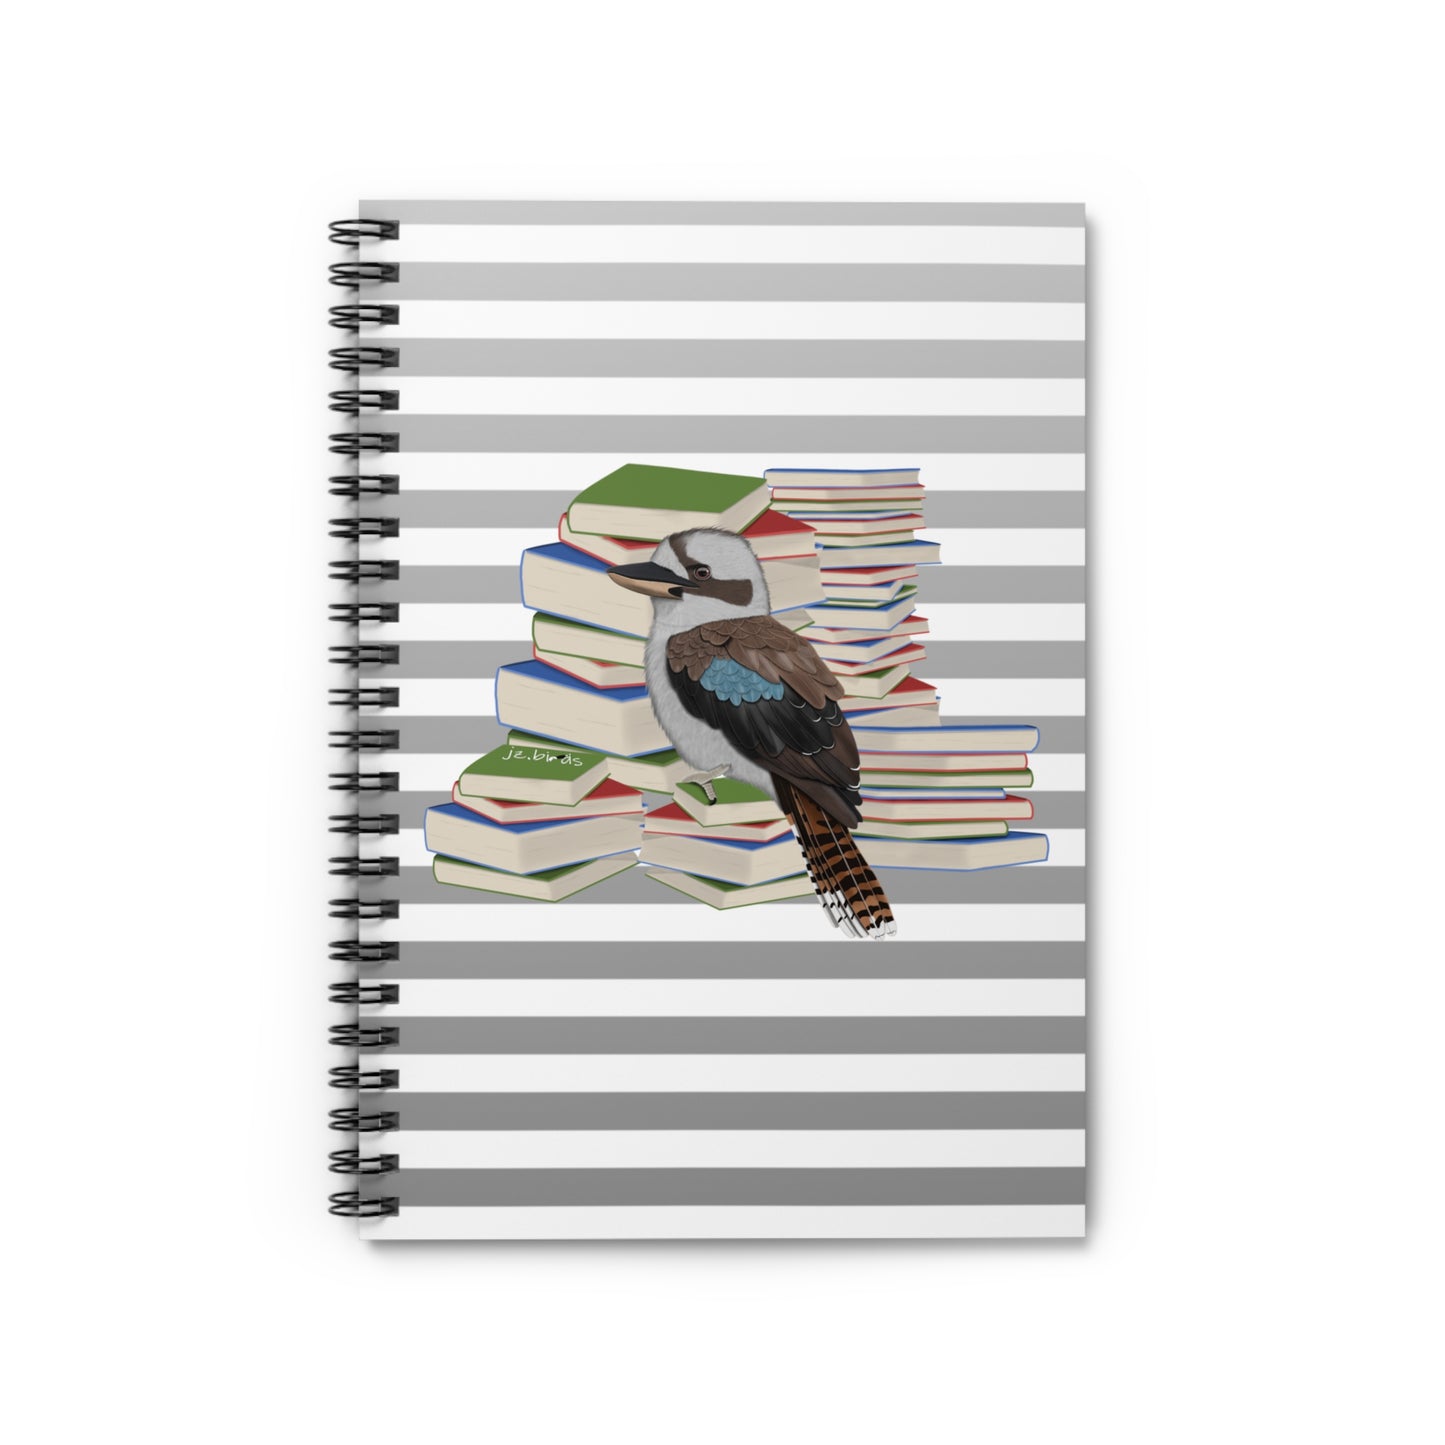 Kookaburra Bird with Books Birdlover Bookworm Spiral Notebook Ruled Line